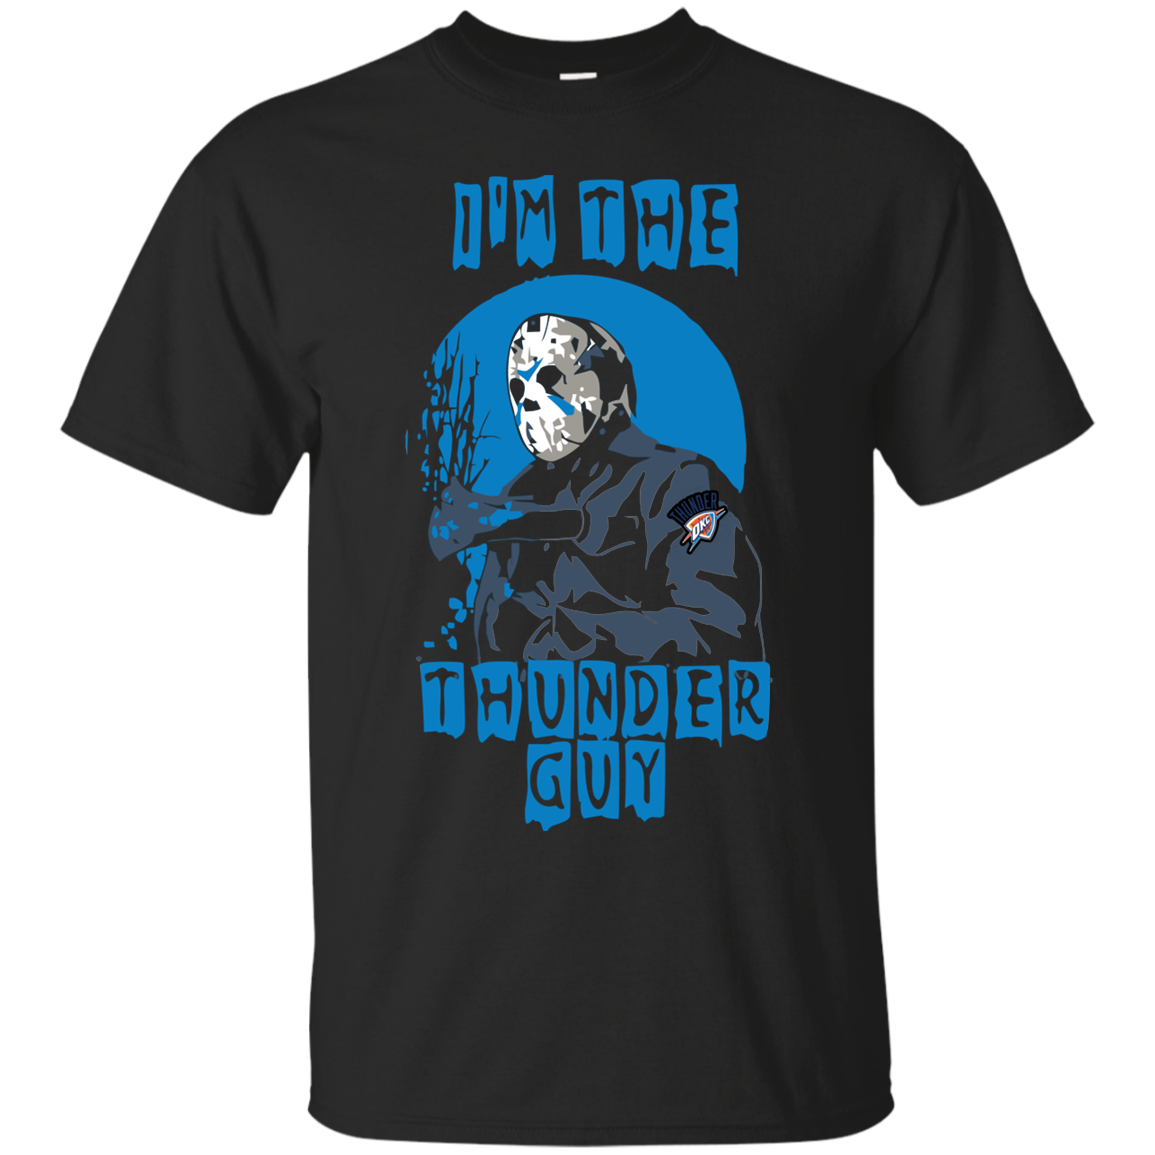 Shirt For Jason Voorhees & Oklahoma-city-thunder Guy Fans T-shirt